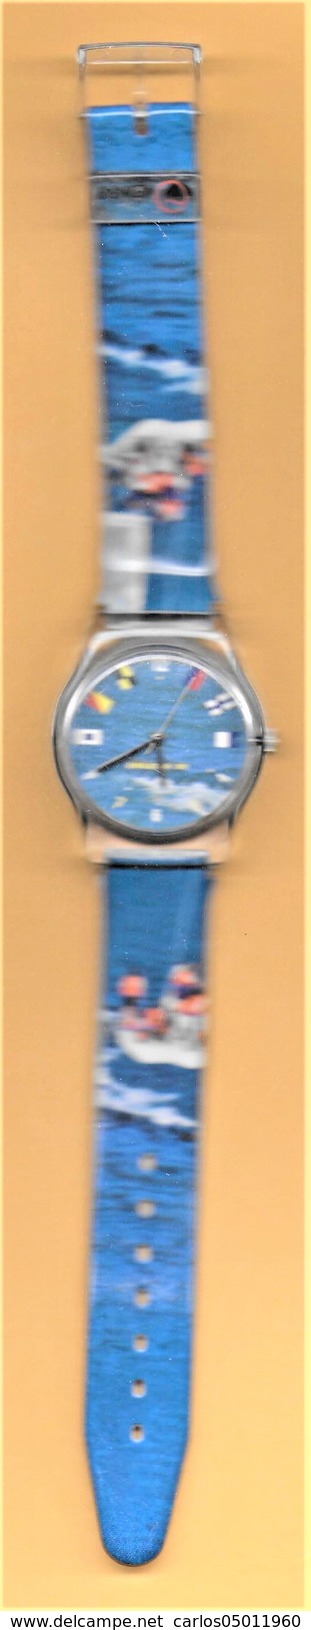 ADVERTISEMENT WATCHES - SOLEXA 200 / 01 (PORTUGAL) - Advertisement Watches